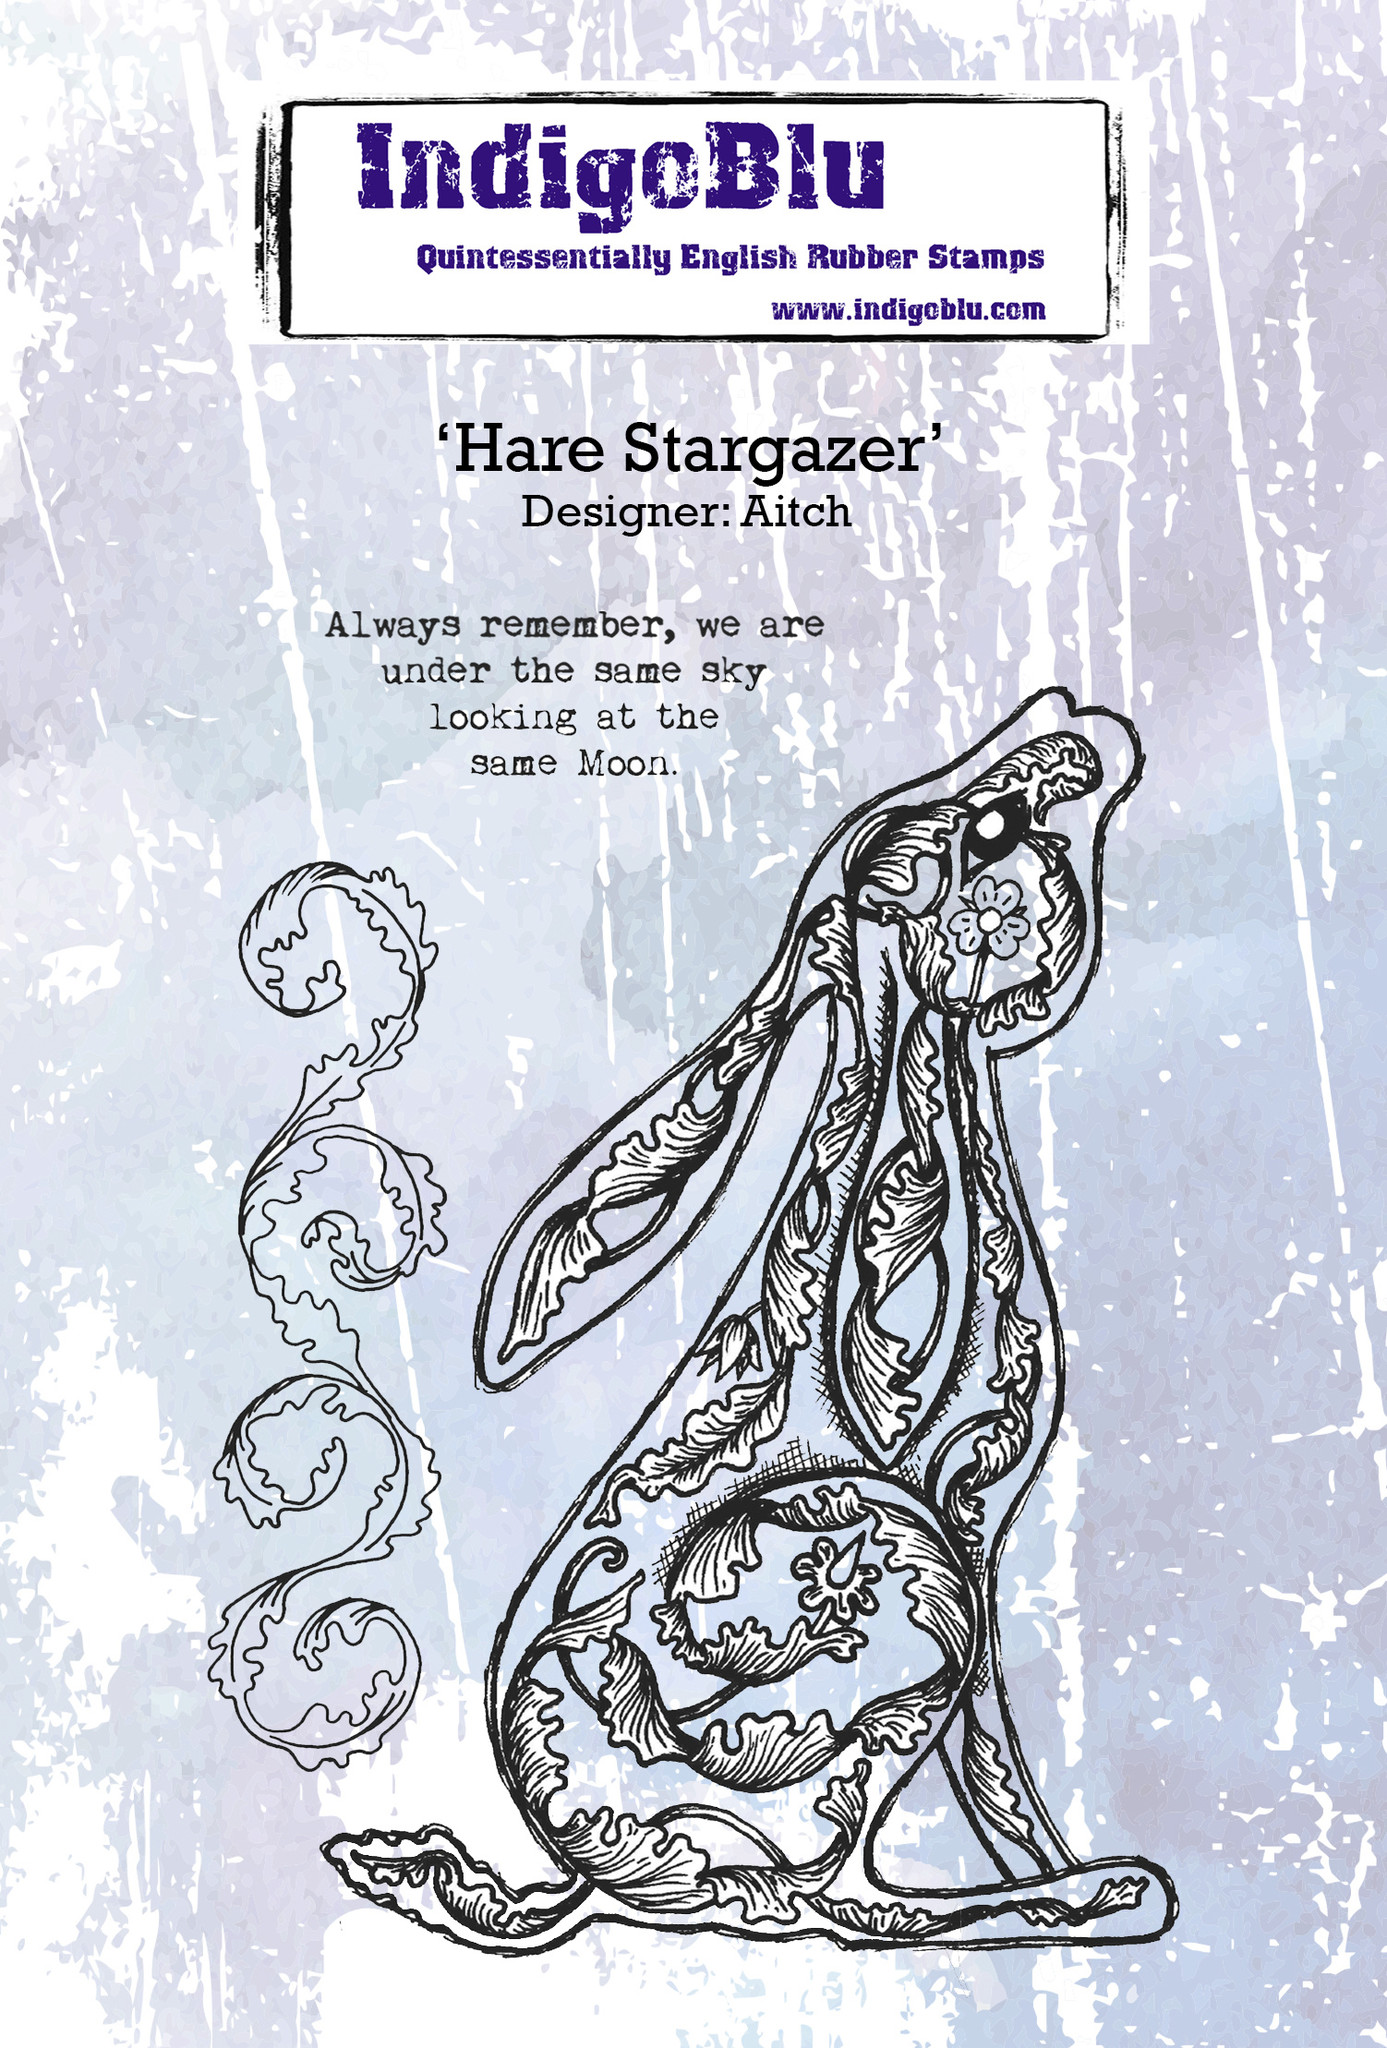 indigoblu-hare-stargazer-a6-rubber-stamp-ind0541